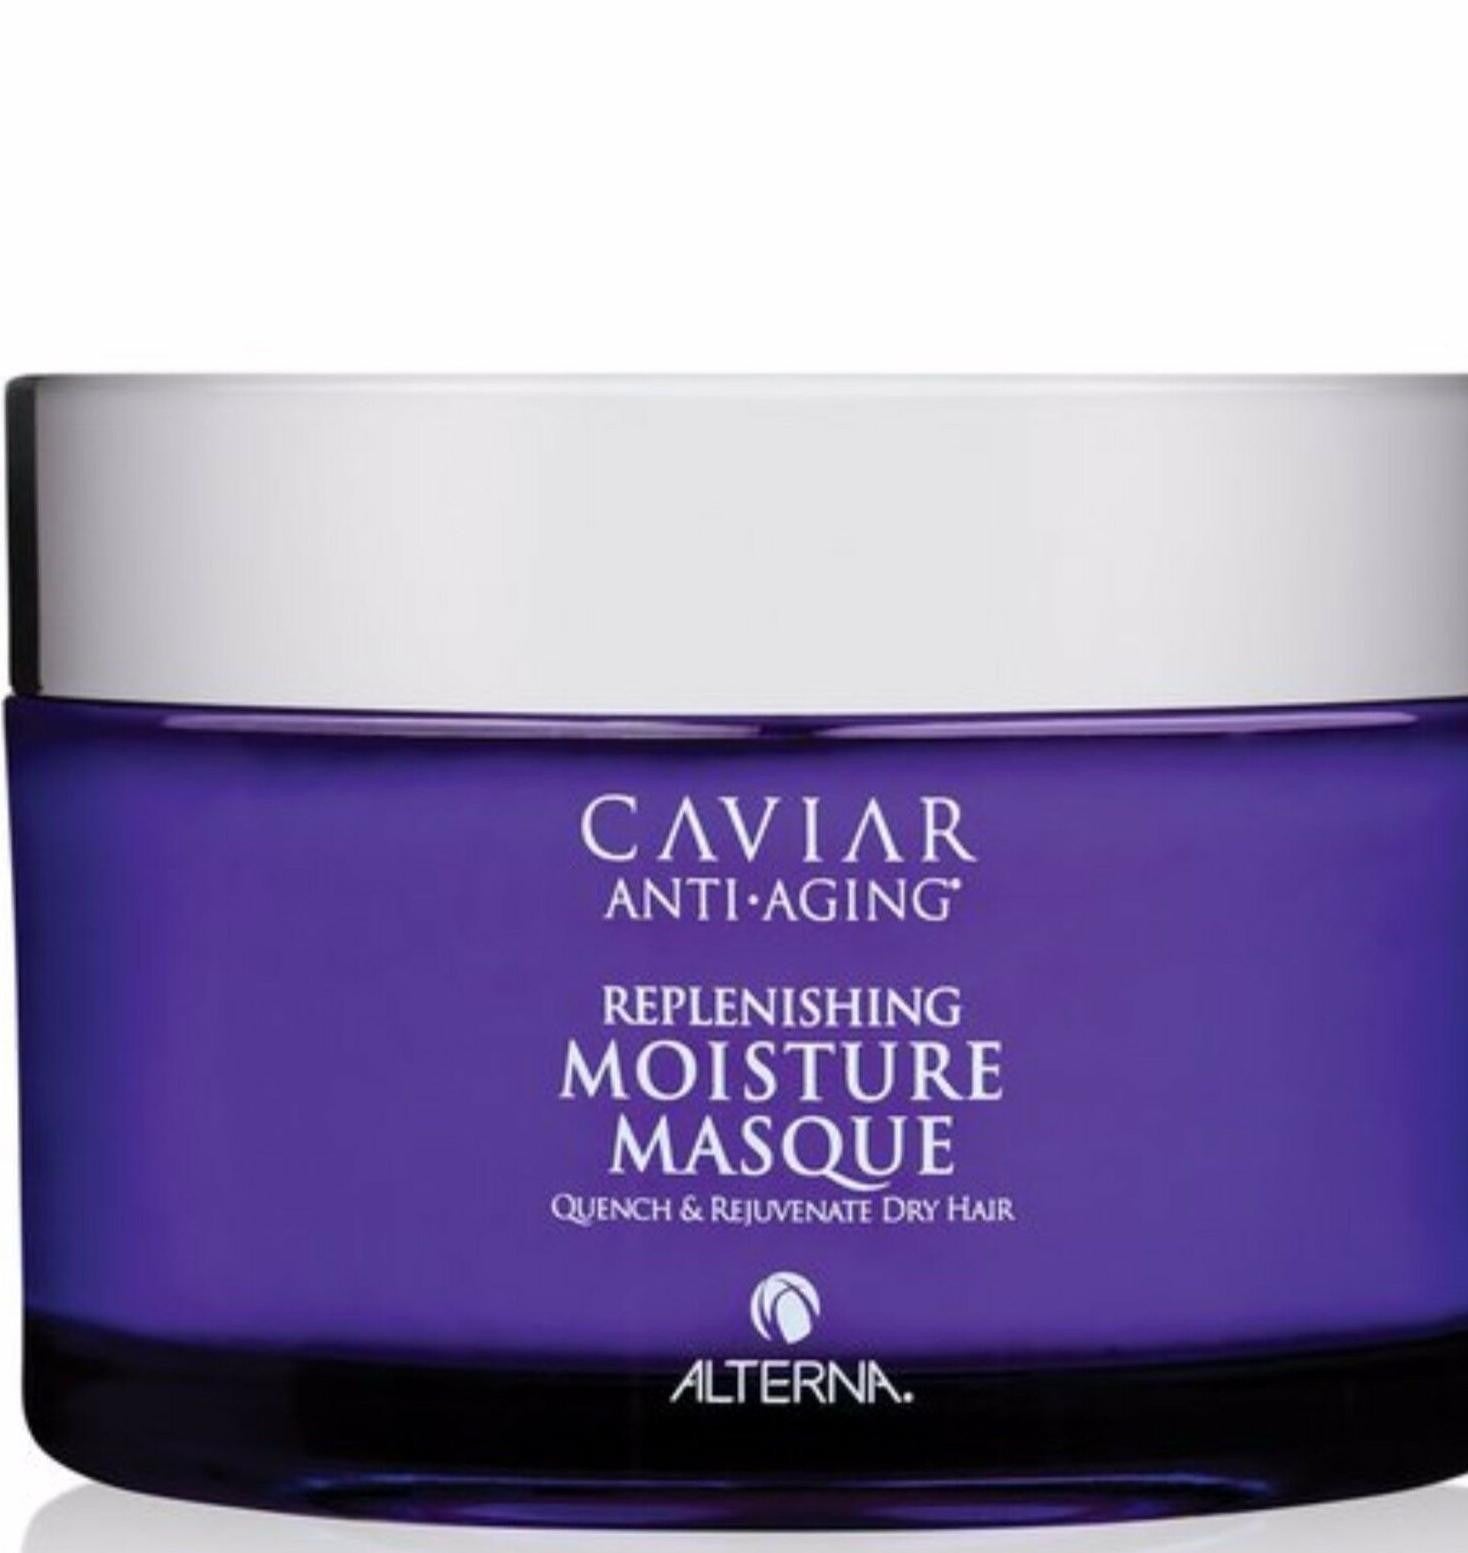 iaahhaircare,Alterna Caviar replenishing Moisture masque 161g,Treatments,Alterna